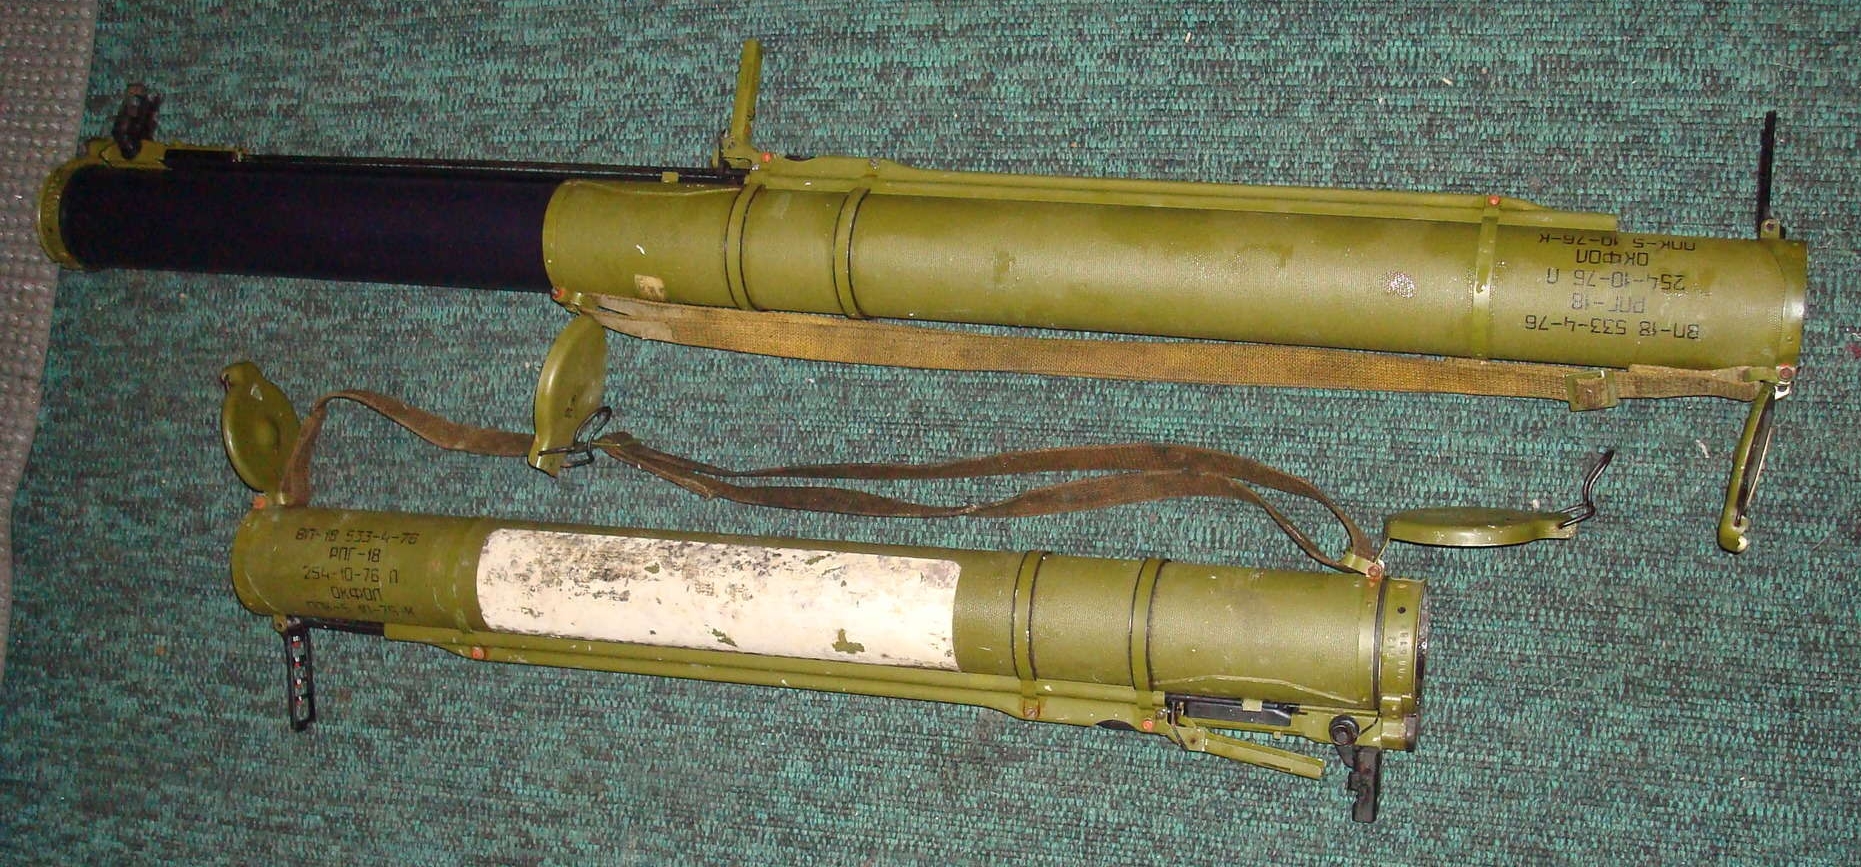 Мм рпг. Муха гранатомет РПГ -18. Реактивная противотанковая граната РПГ-18 Муха. Граната РПГ 18. Ручной противотанковый гранатомёт «Муха» (РПГ-18).